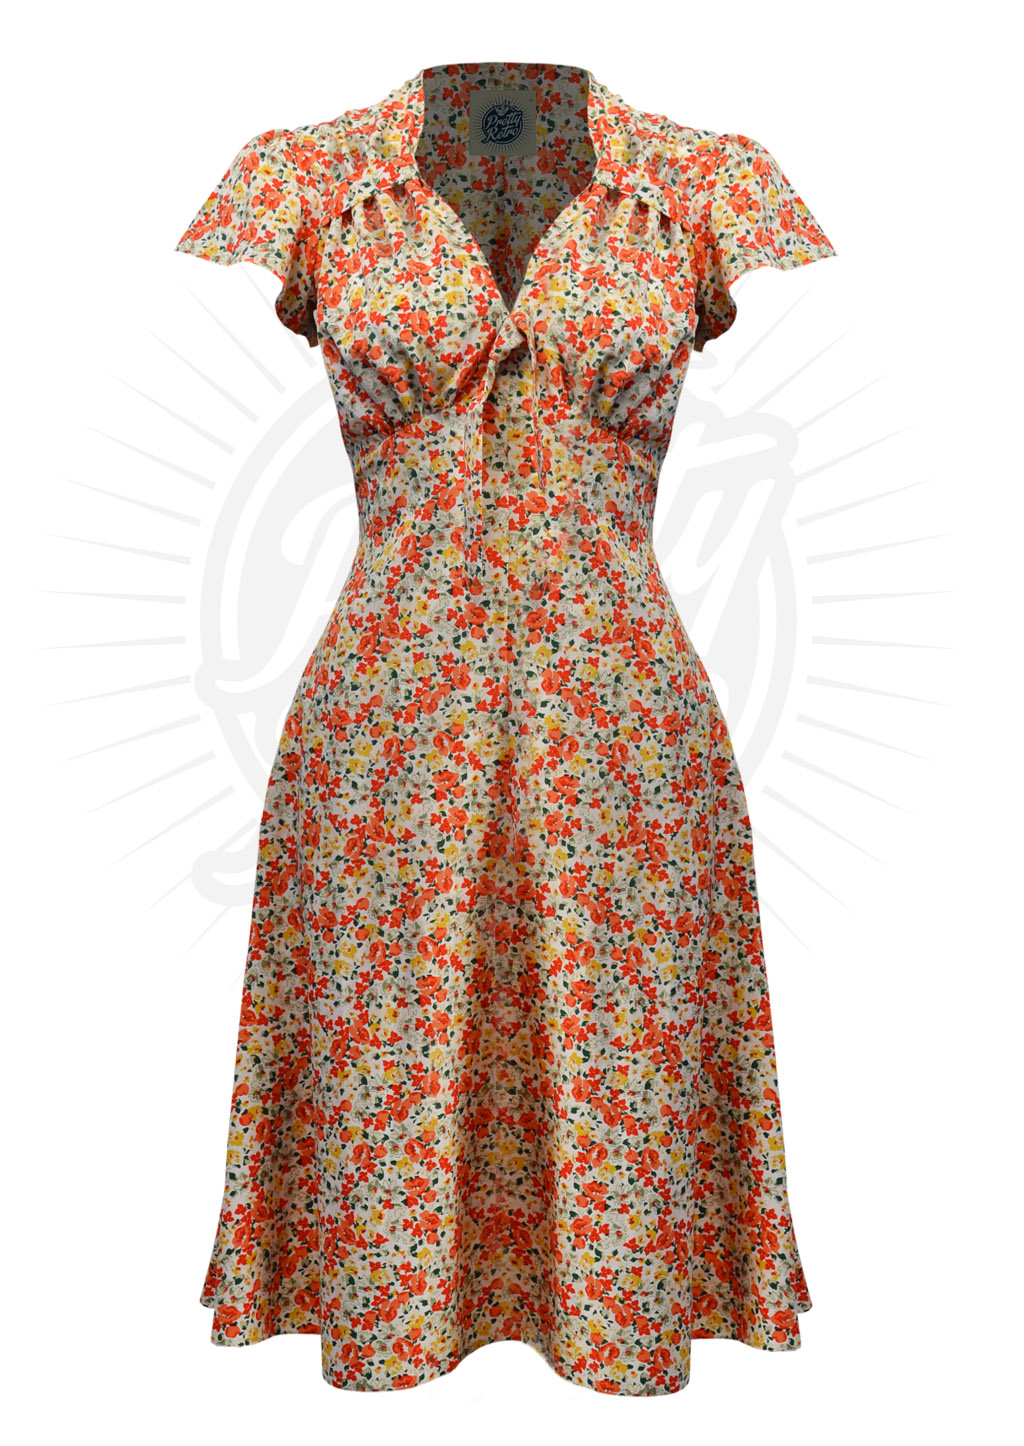 Pretty 40s Style Tea Dress in Ditsy